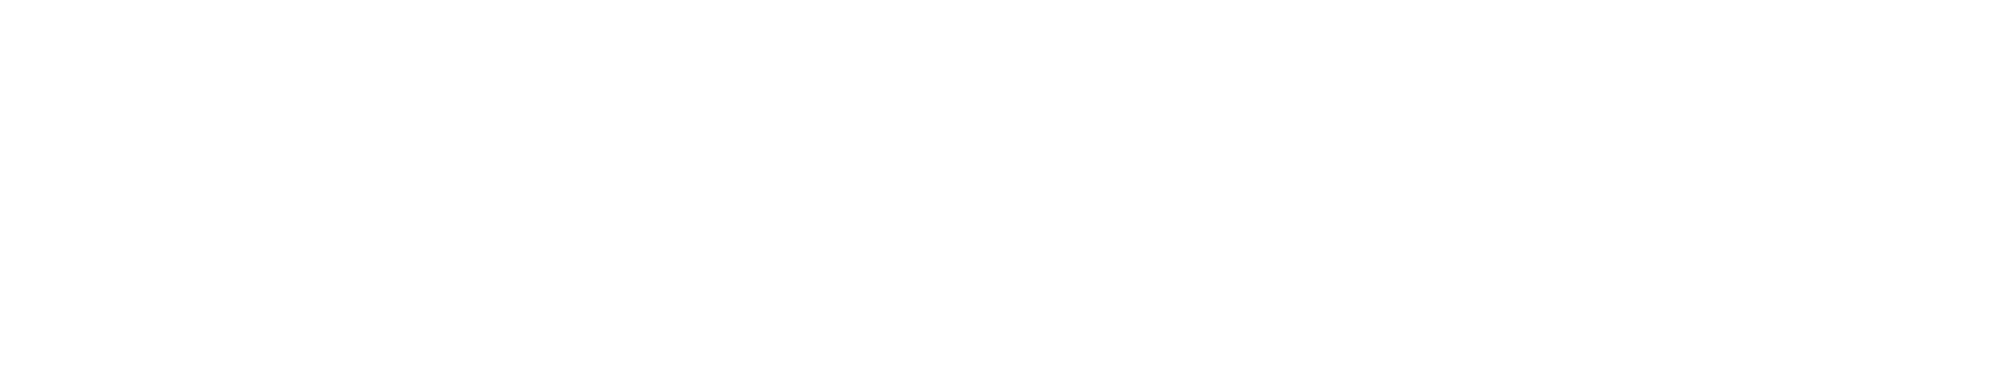 Weave logo, white